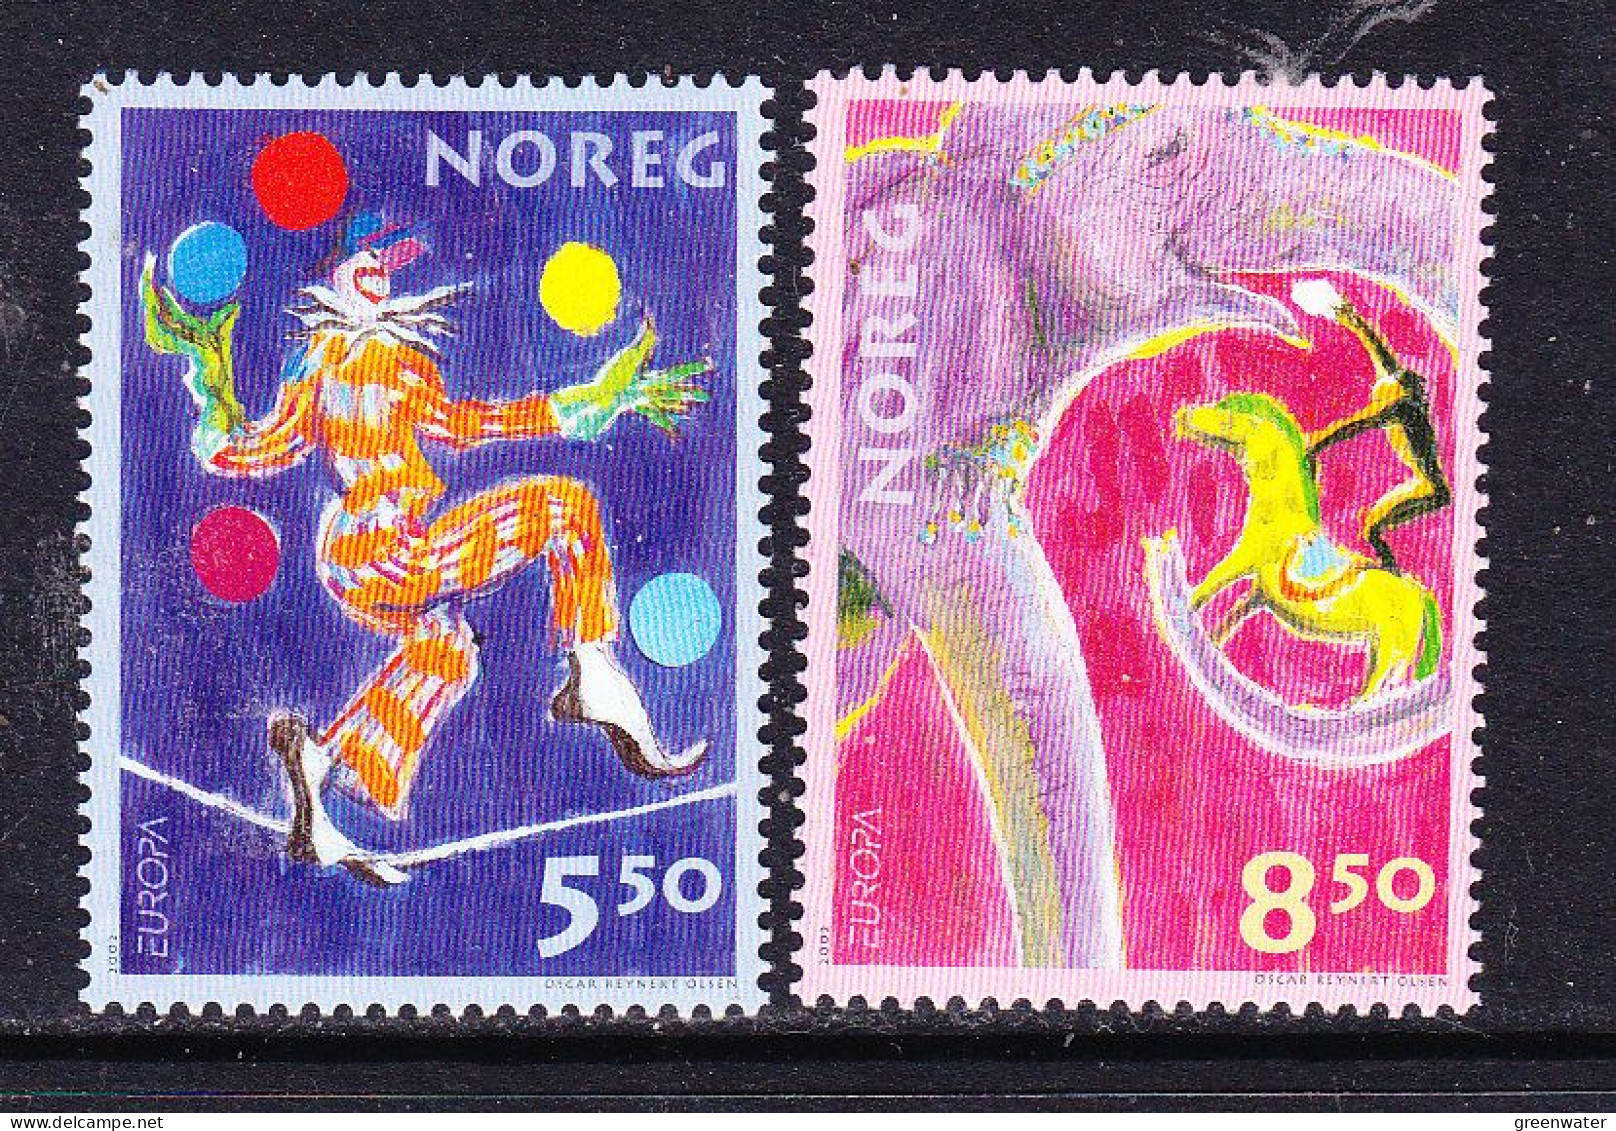 Europa Cept 2002 Norway 2v ** Mnh (Circus) (59441) ROCK BOTTOM PRICE - 2002